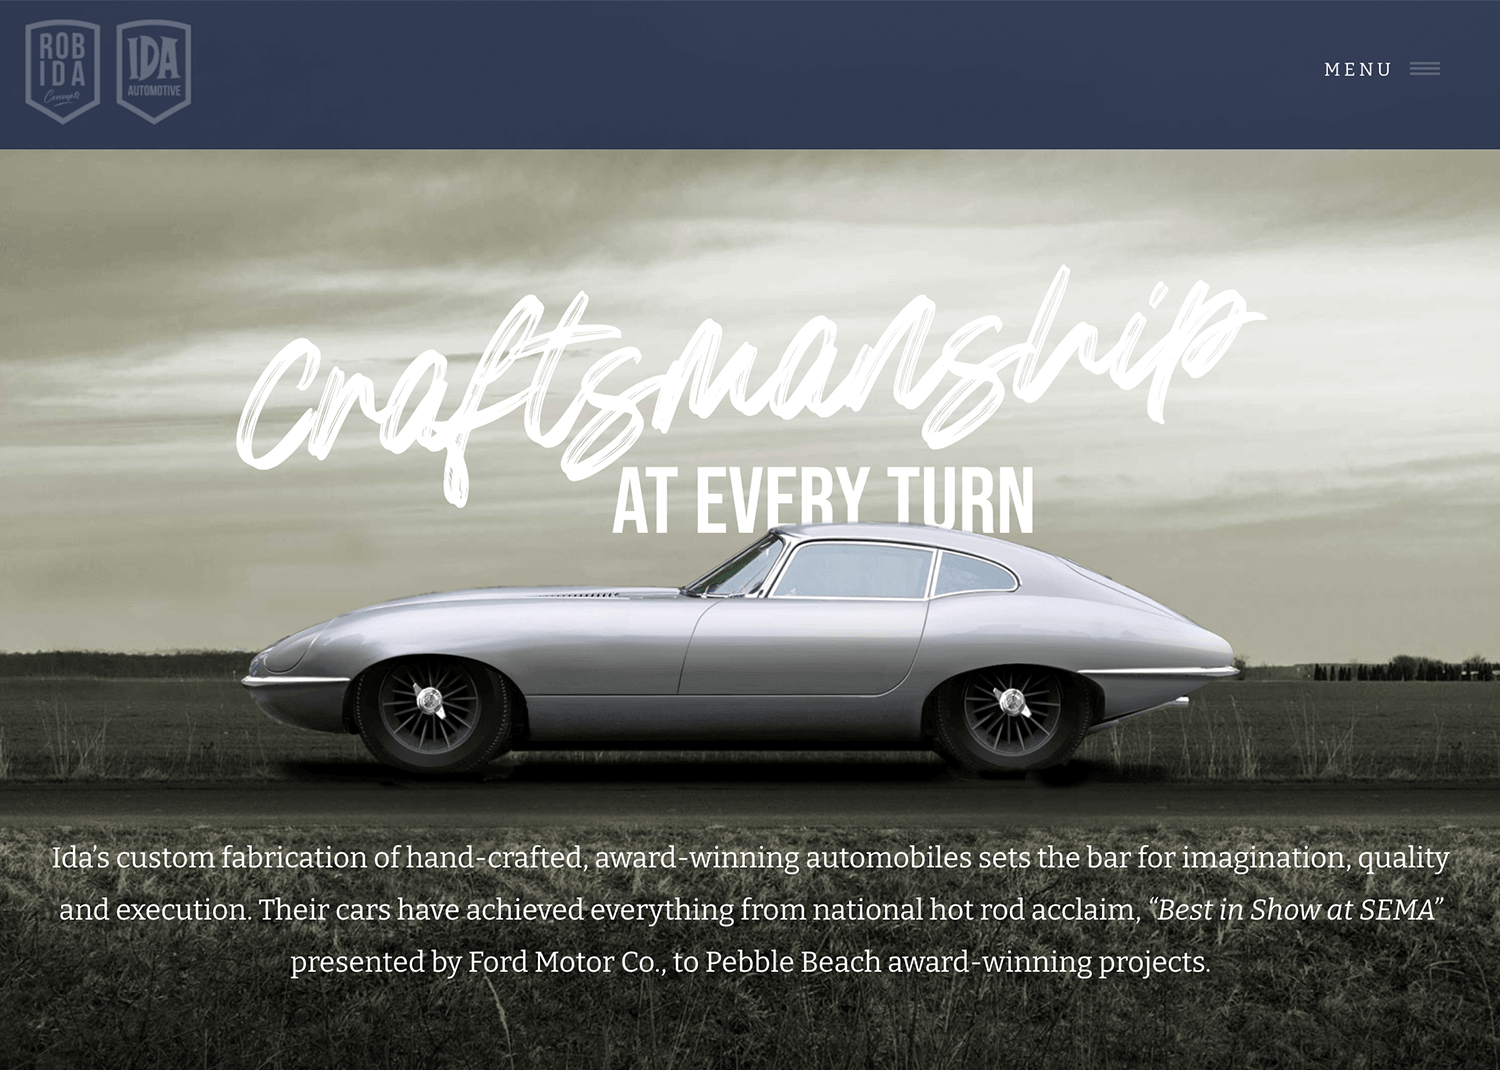 Hero image of a classic car by Rob Ida, highlighting top craftsmanship